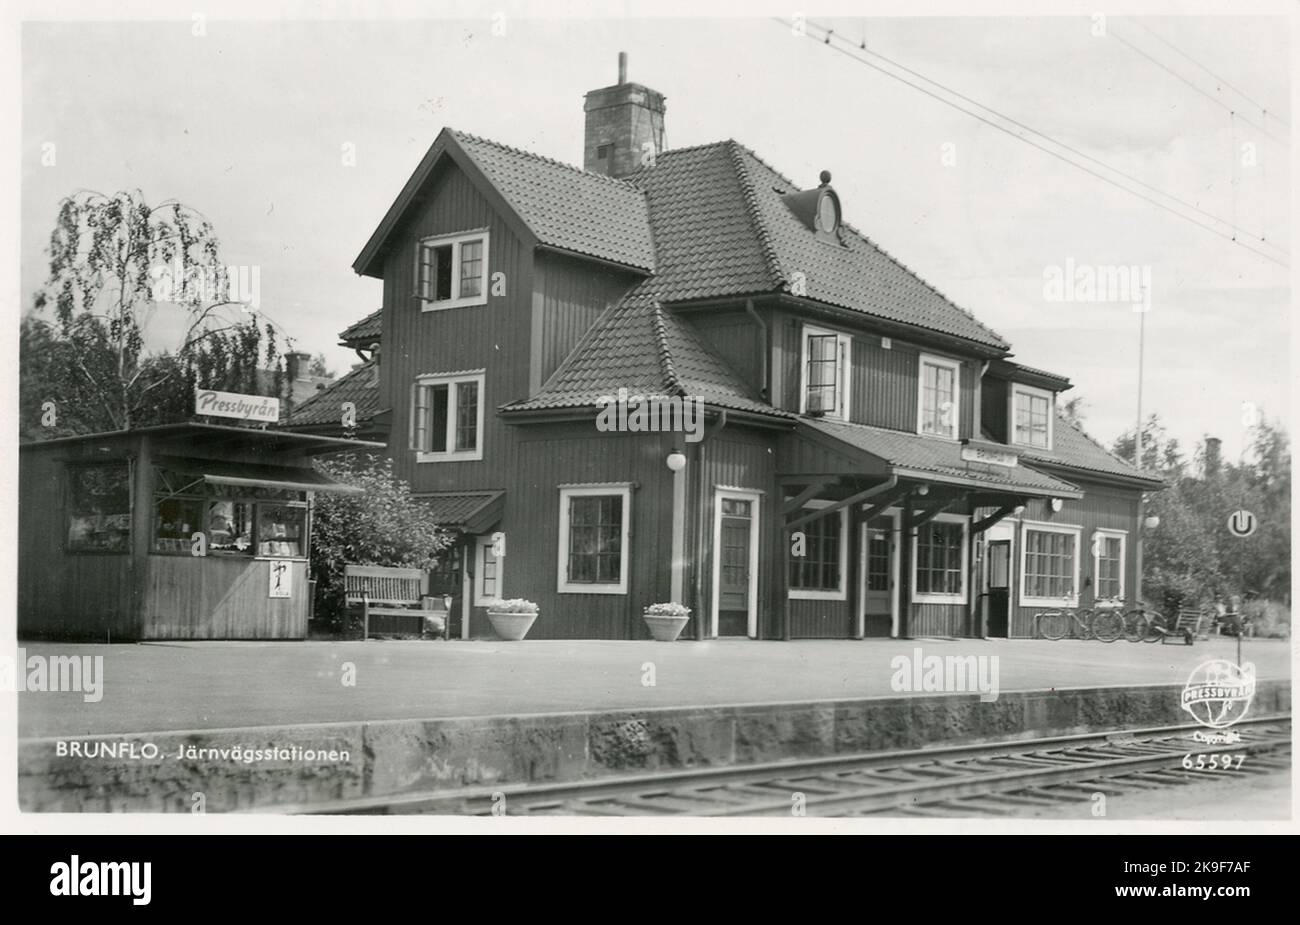 Brunflo Station around the year 1950. Stock Photo